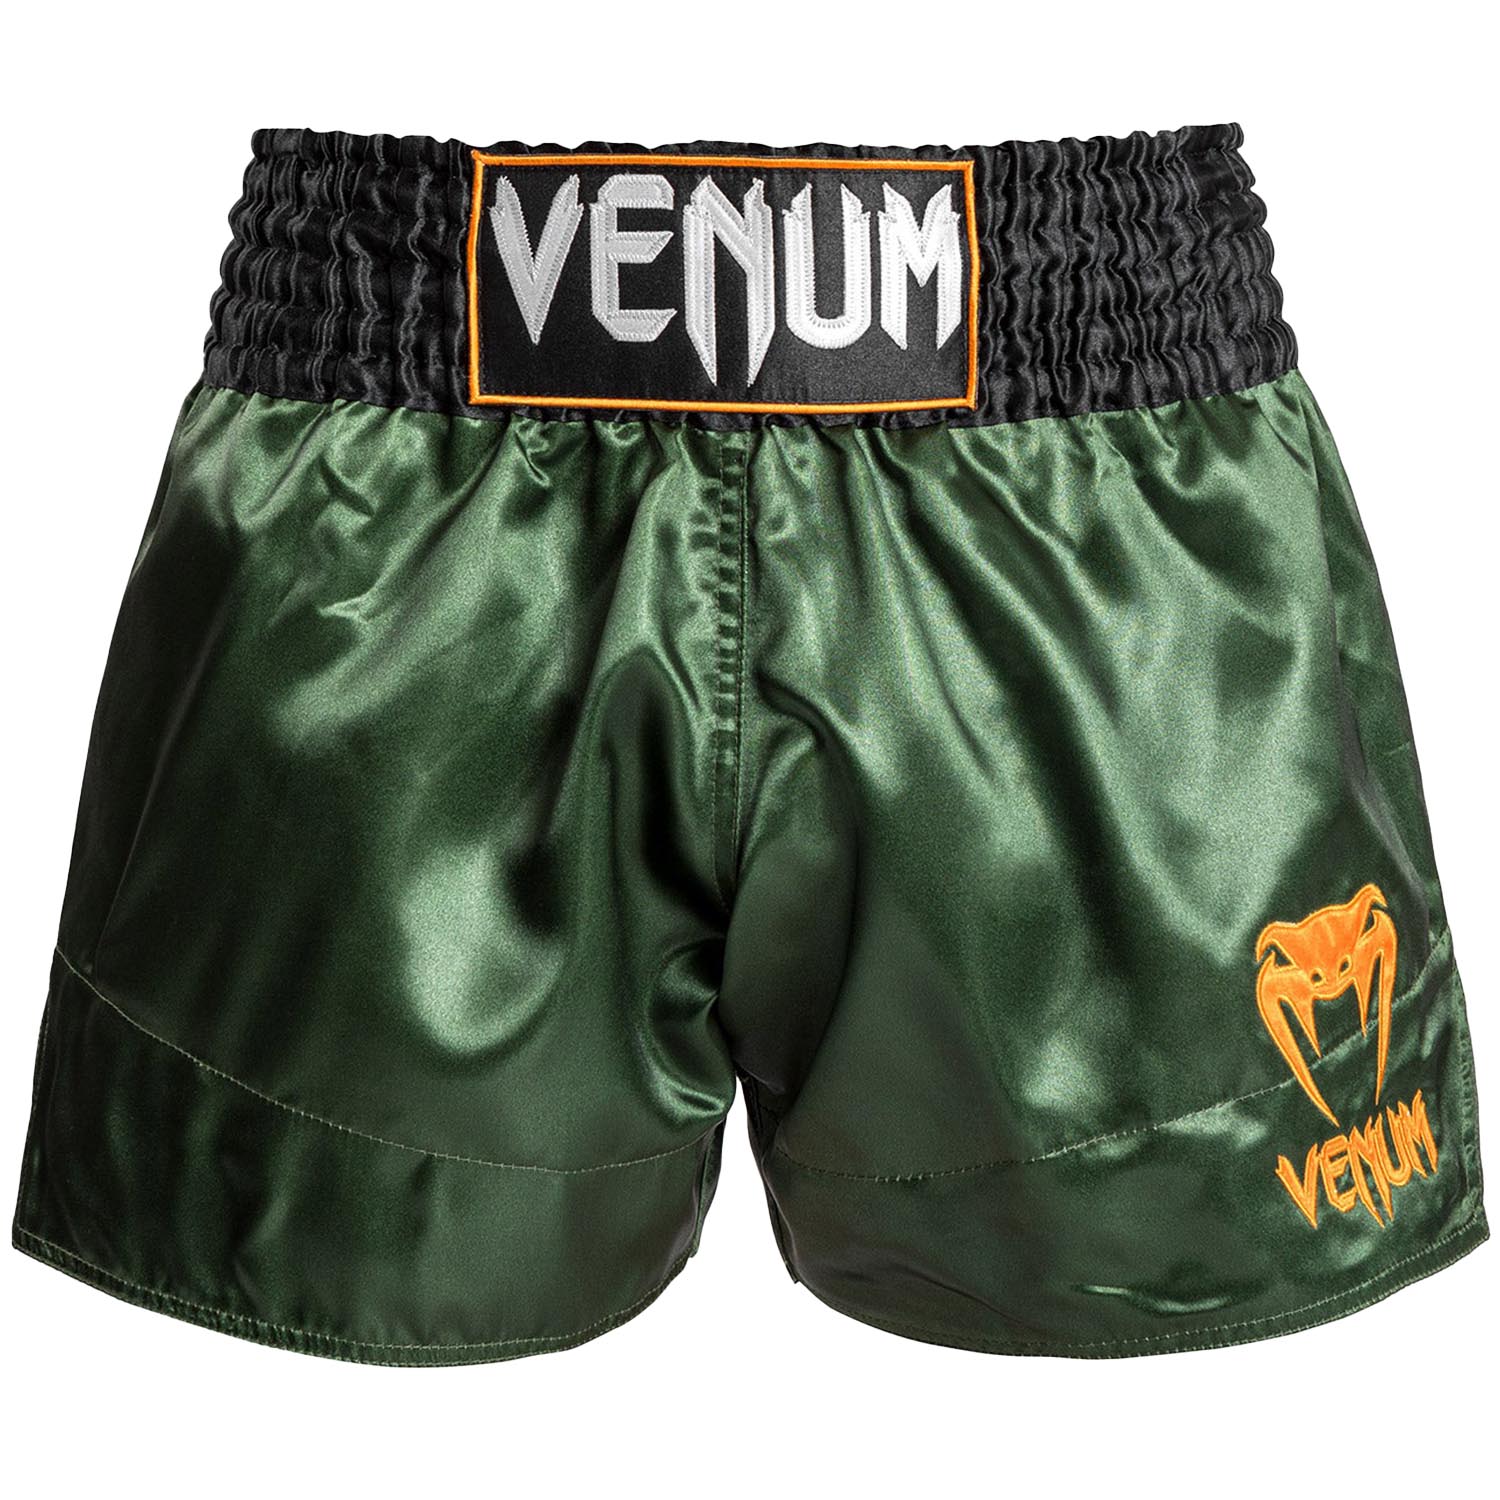 VENUM Muay Thai Shorts, Classic, grün-schwarz-gold, M